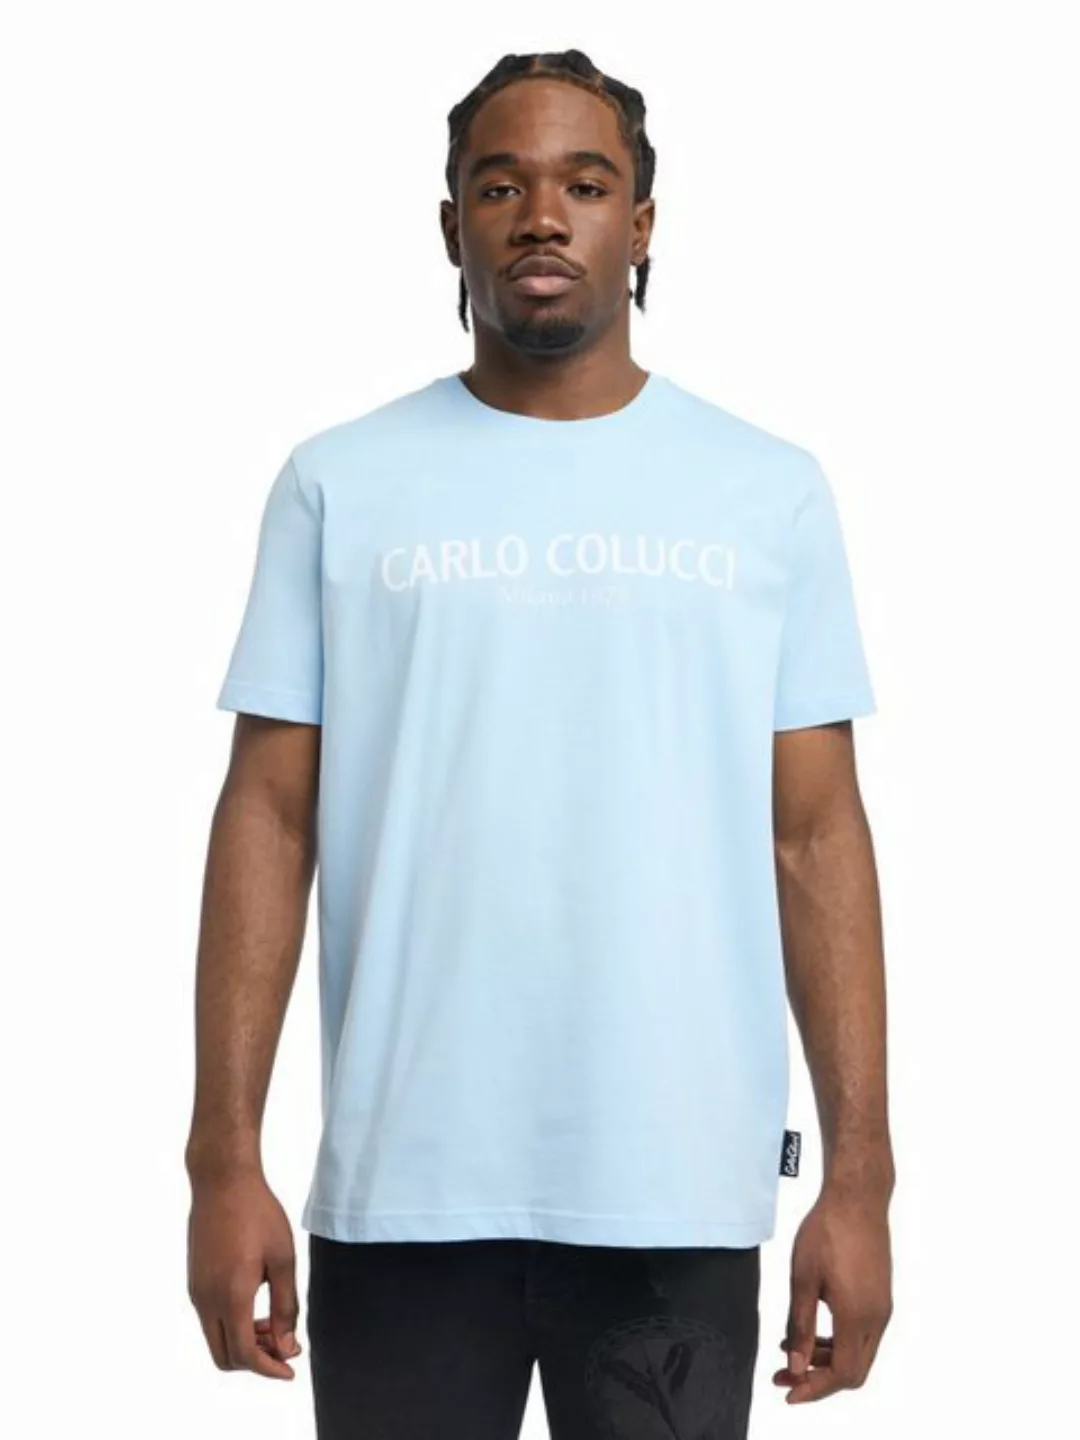 CARLO COLUCCI T-Shirt di Comun günstig online kaufen